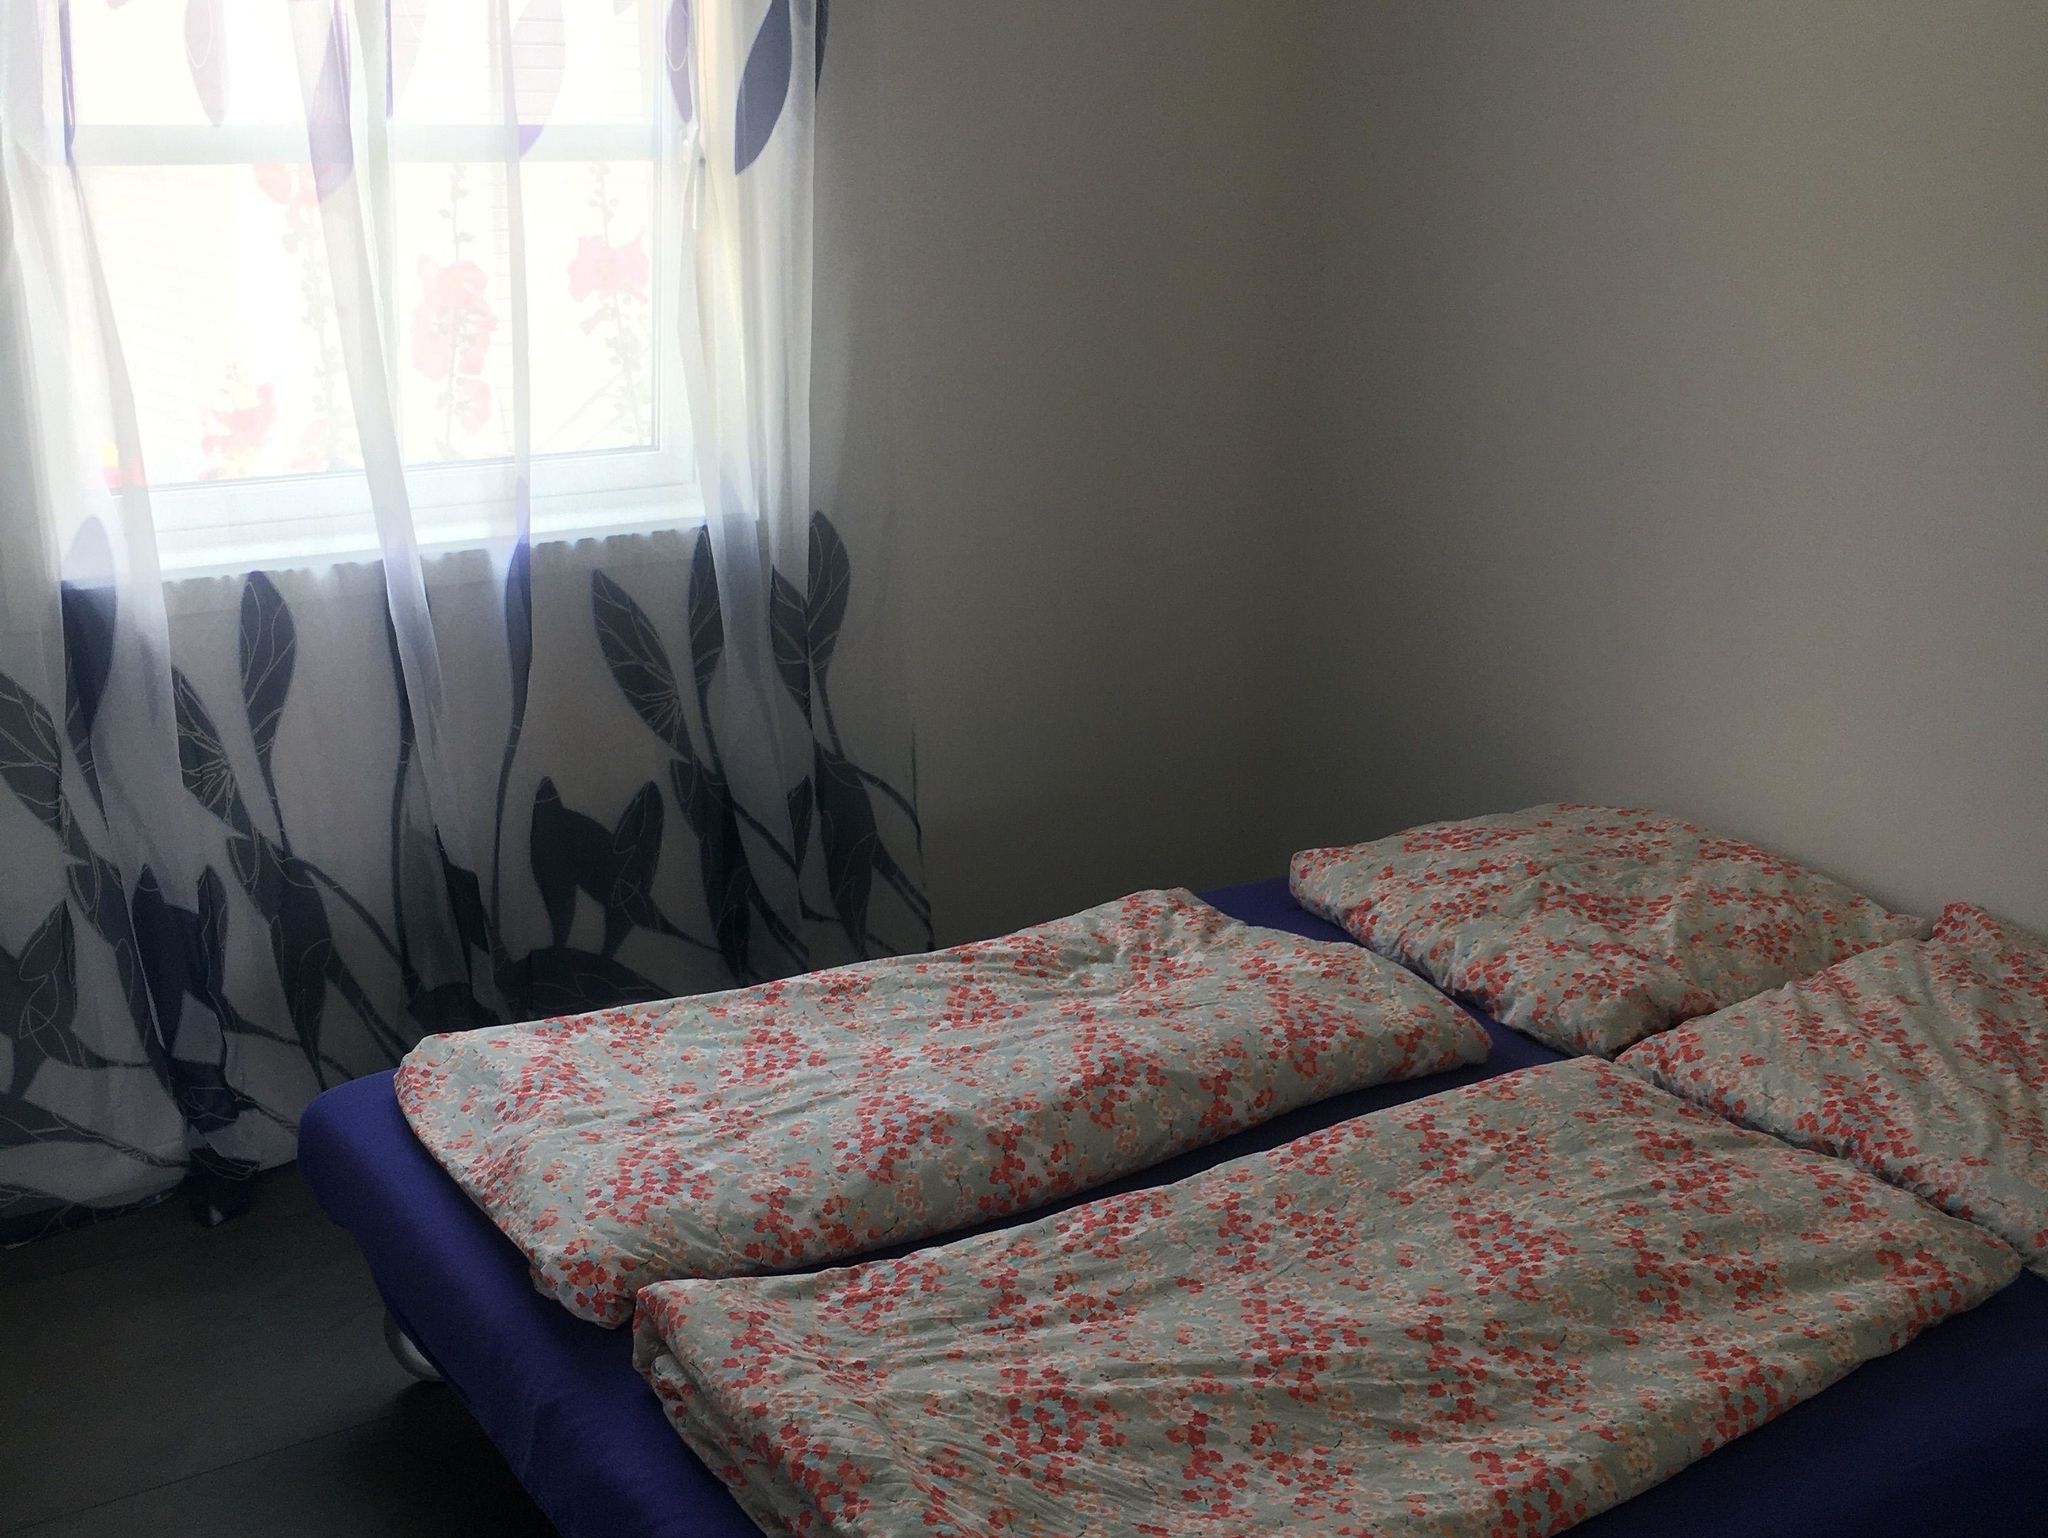 Raum mit Doppelbett